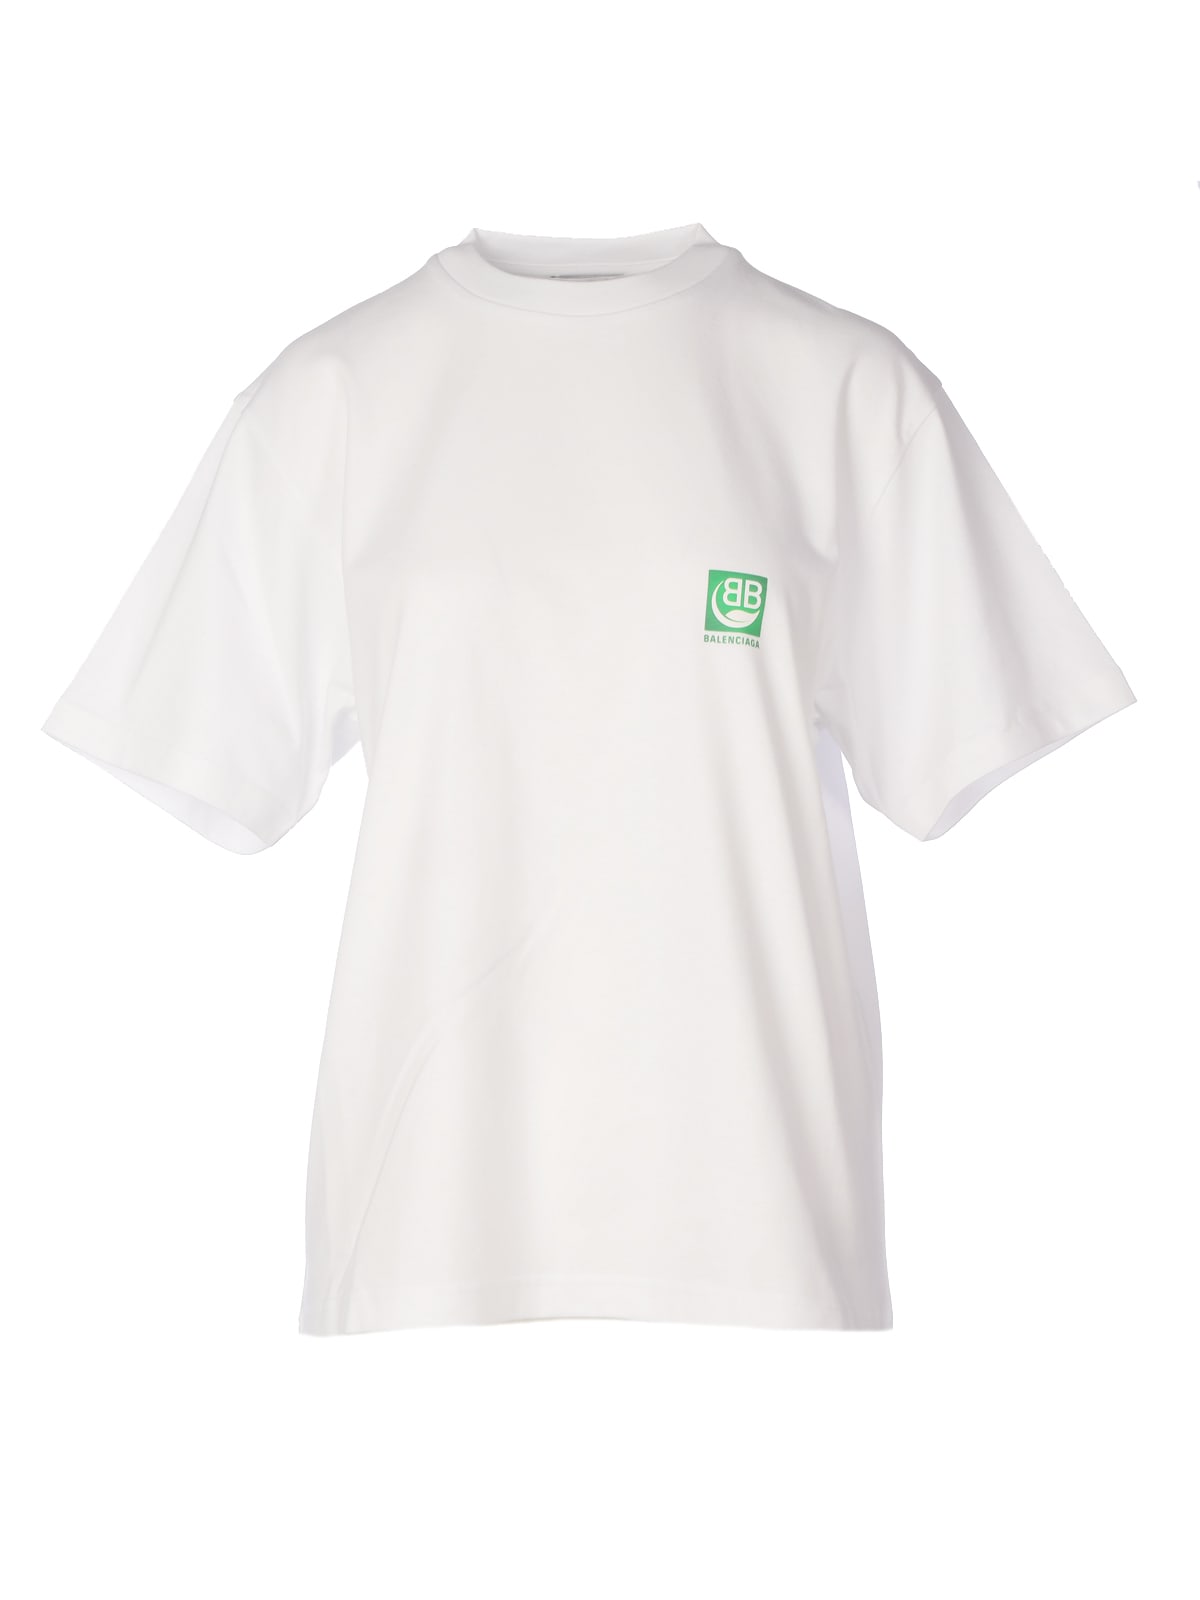 balenciaga white t shirt price